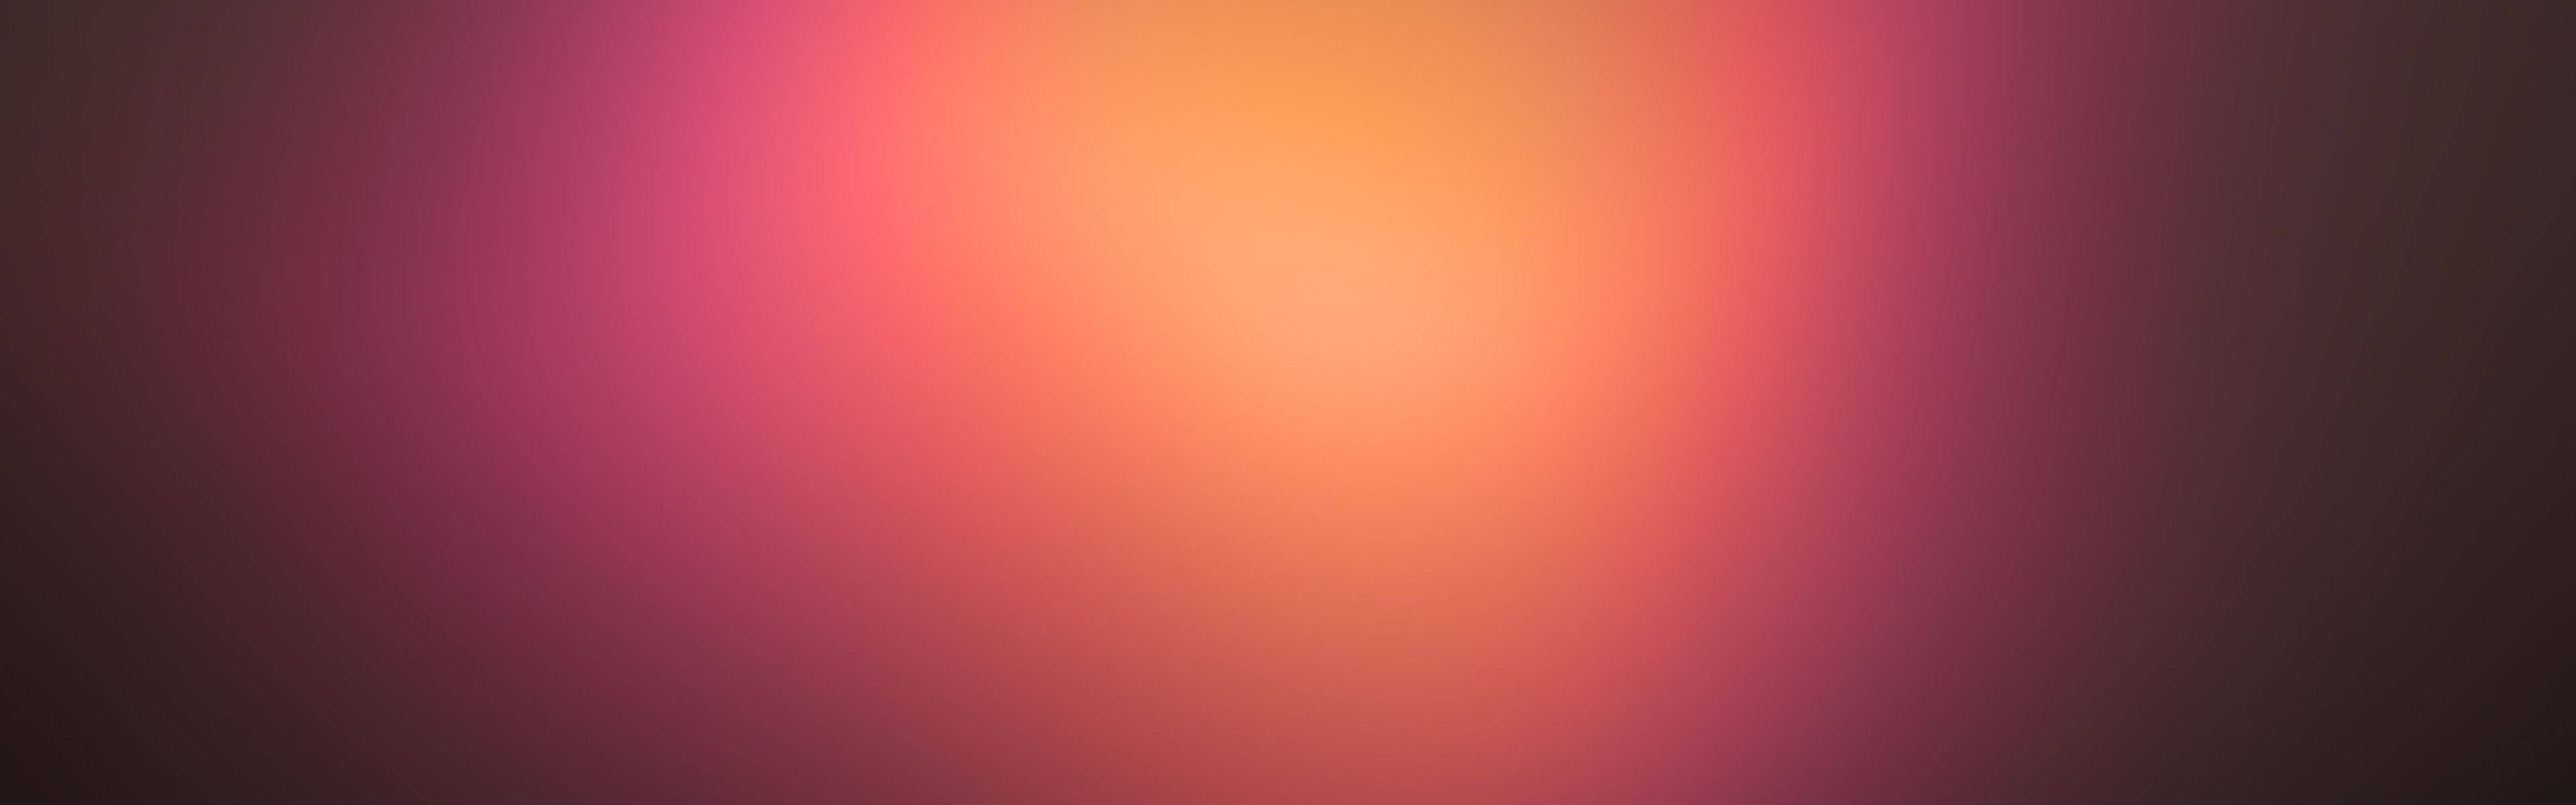 A Beautiful Pink Blur Background